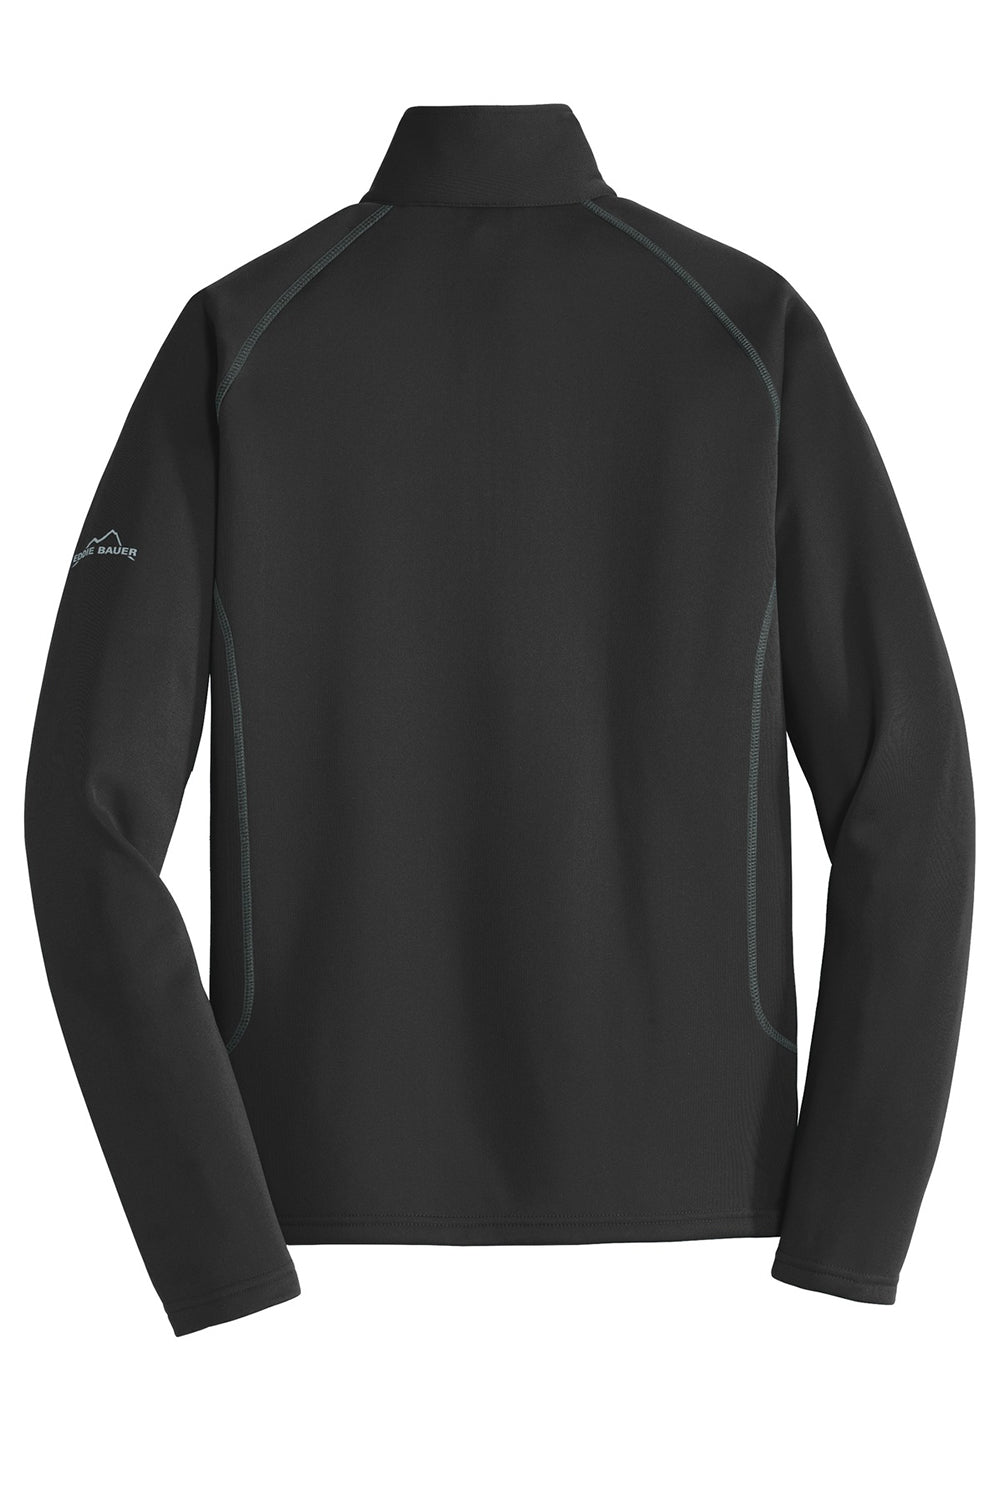 Eddie Bauer EB236 Mens Smooth Fleece 1/4 Zip Sweatshirt Black Flat Back